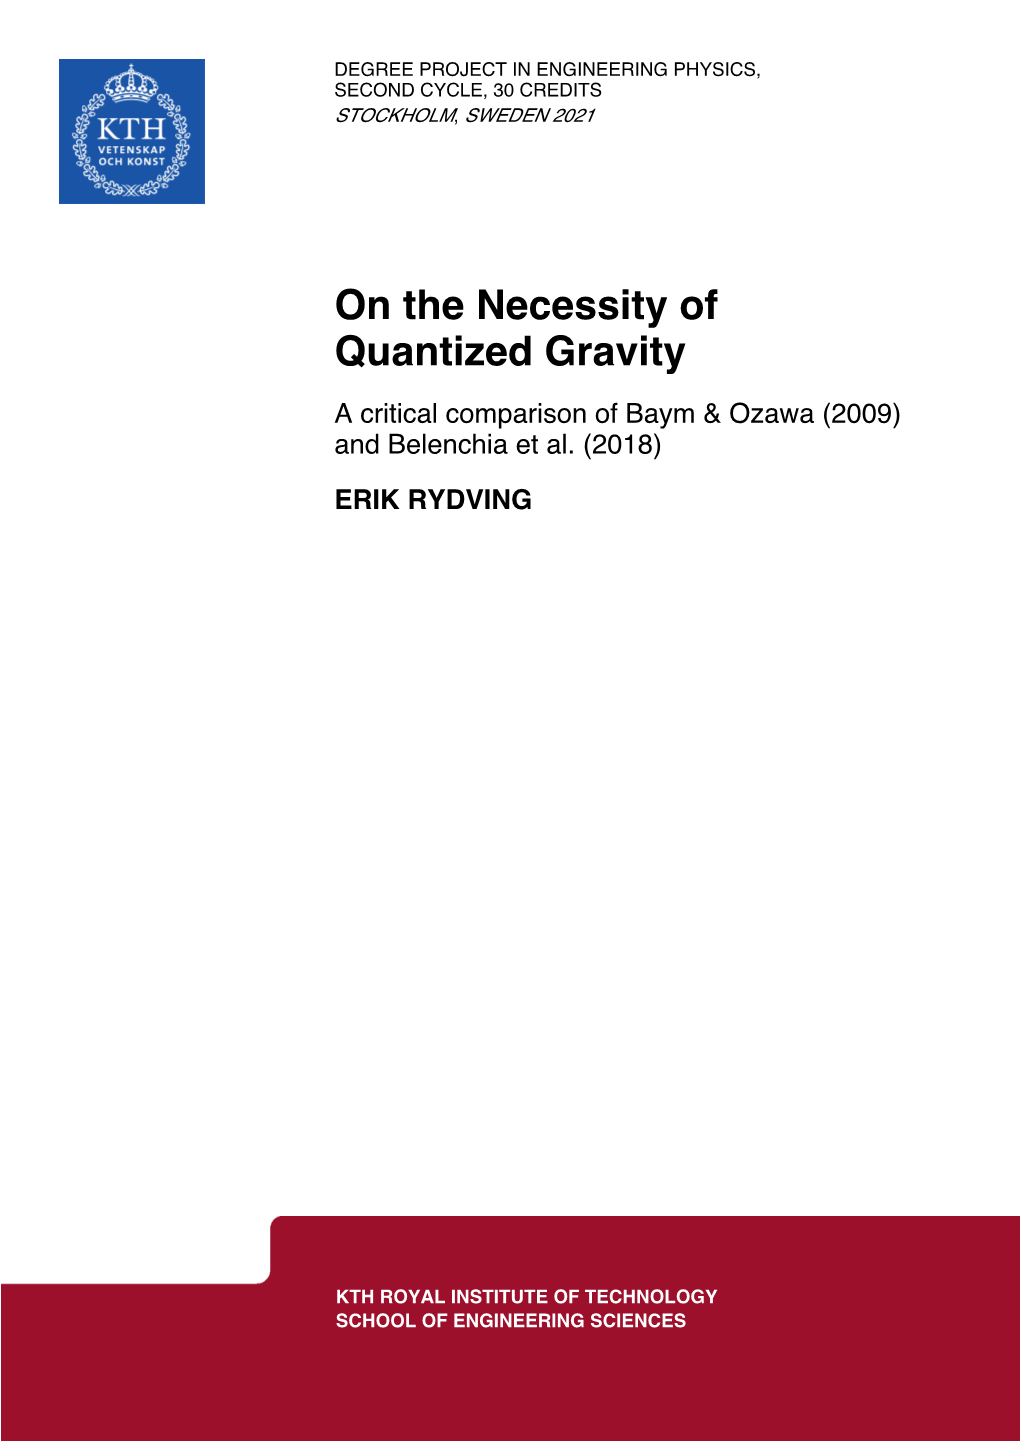 On the Necessity of Quantized Gravity a Critical Comparison of Baym & Ozawa (2009) and Belenchia Et Al